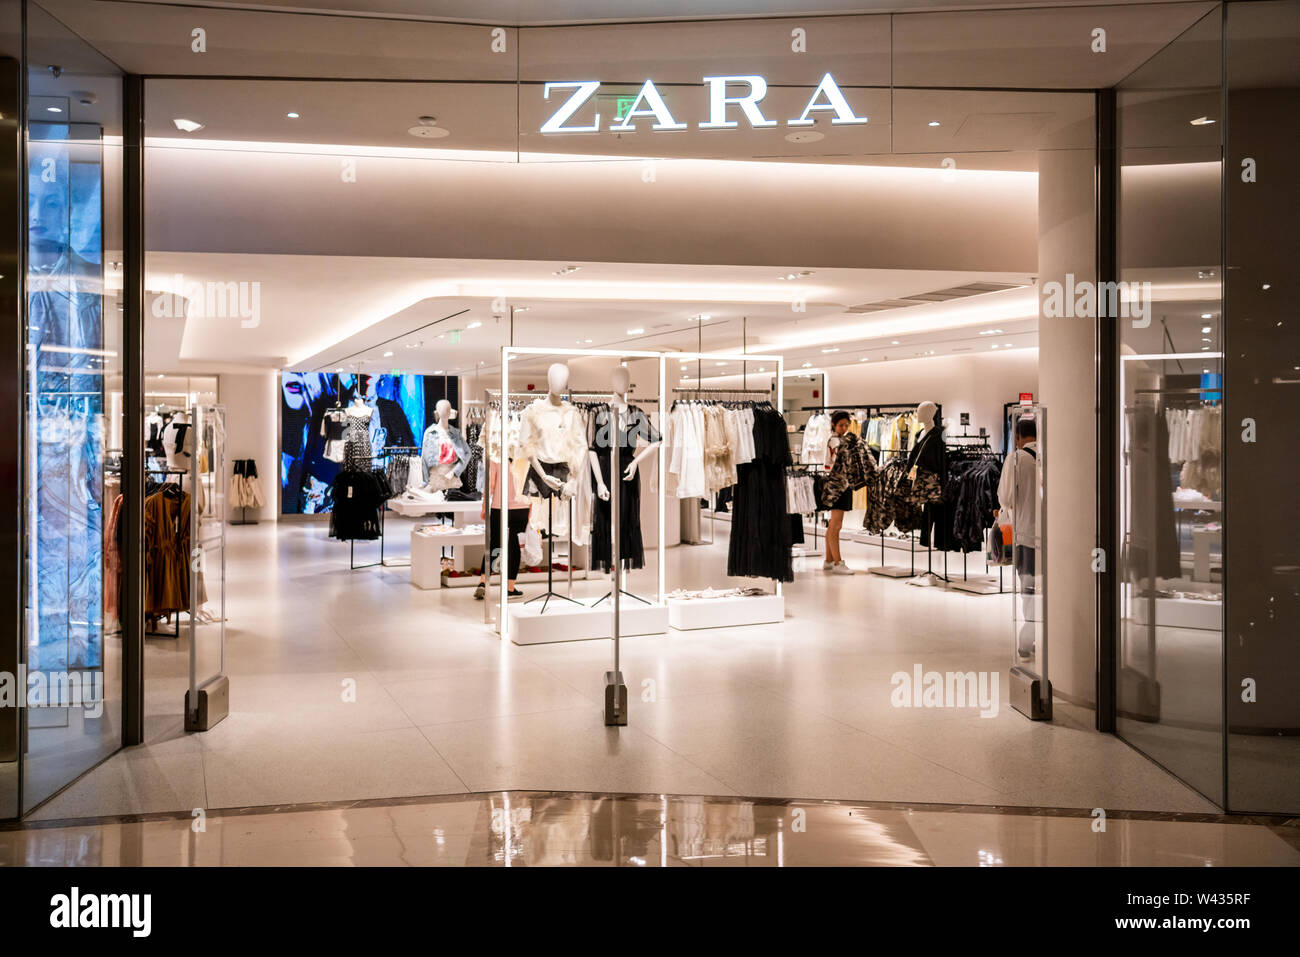 Spanish fast fashion retailer Zara store and logo seen in Shanghai Stock  Photo - Alamy